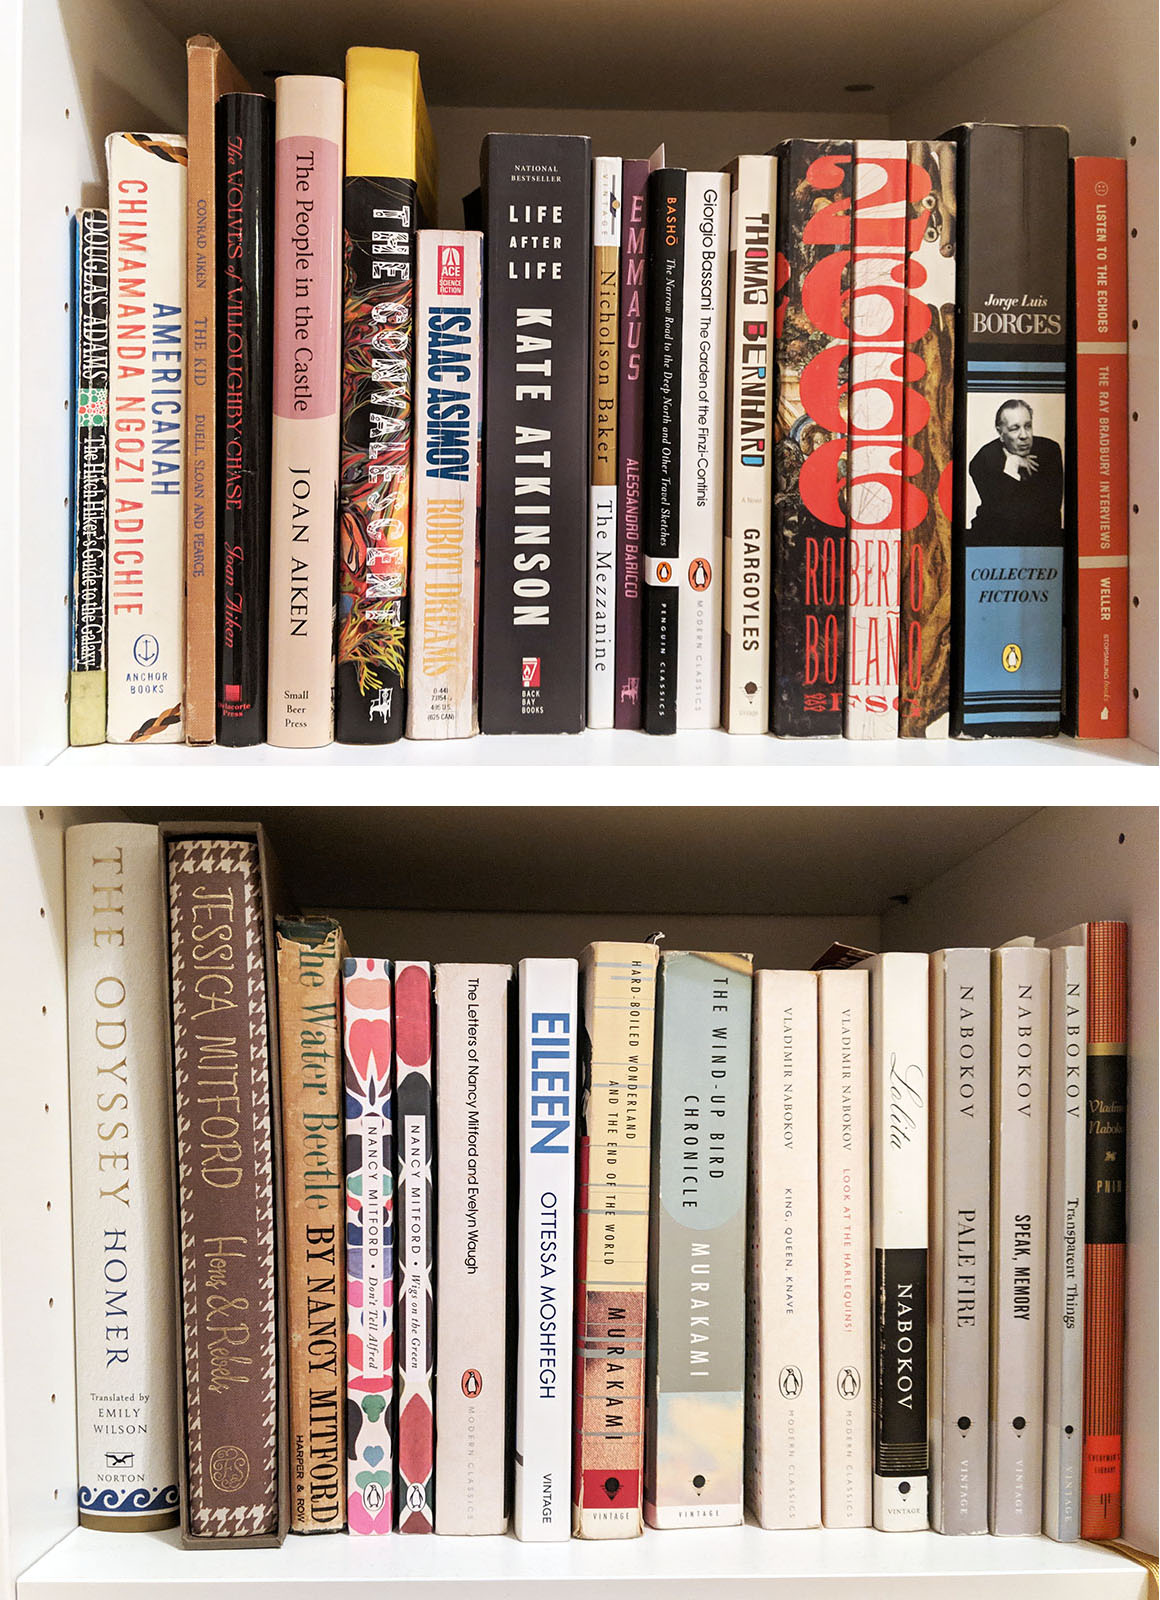 Bookshelf of fiction books